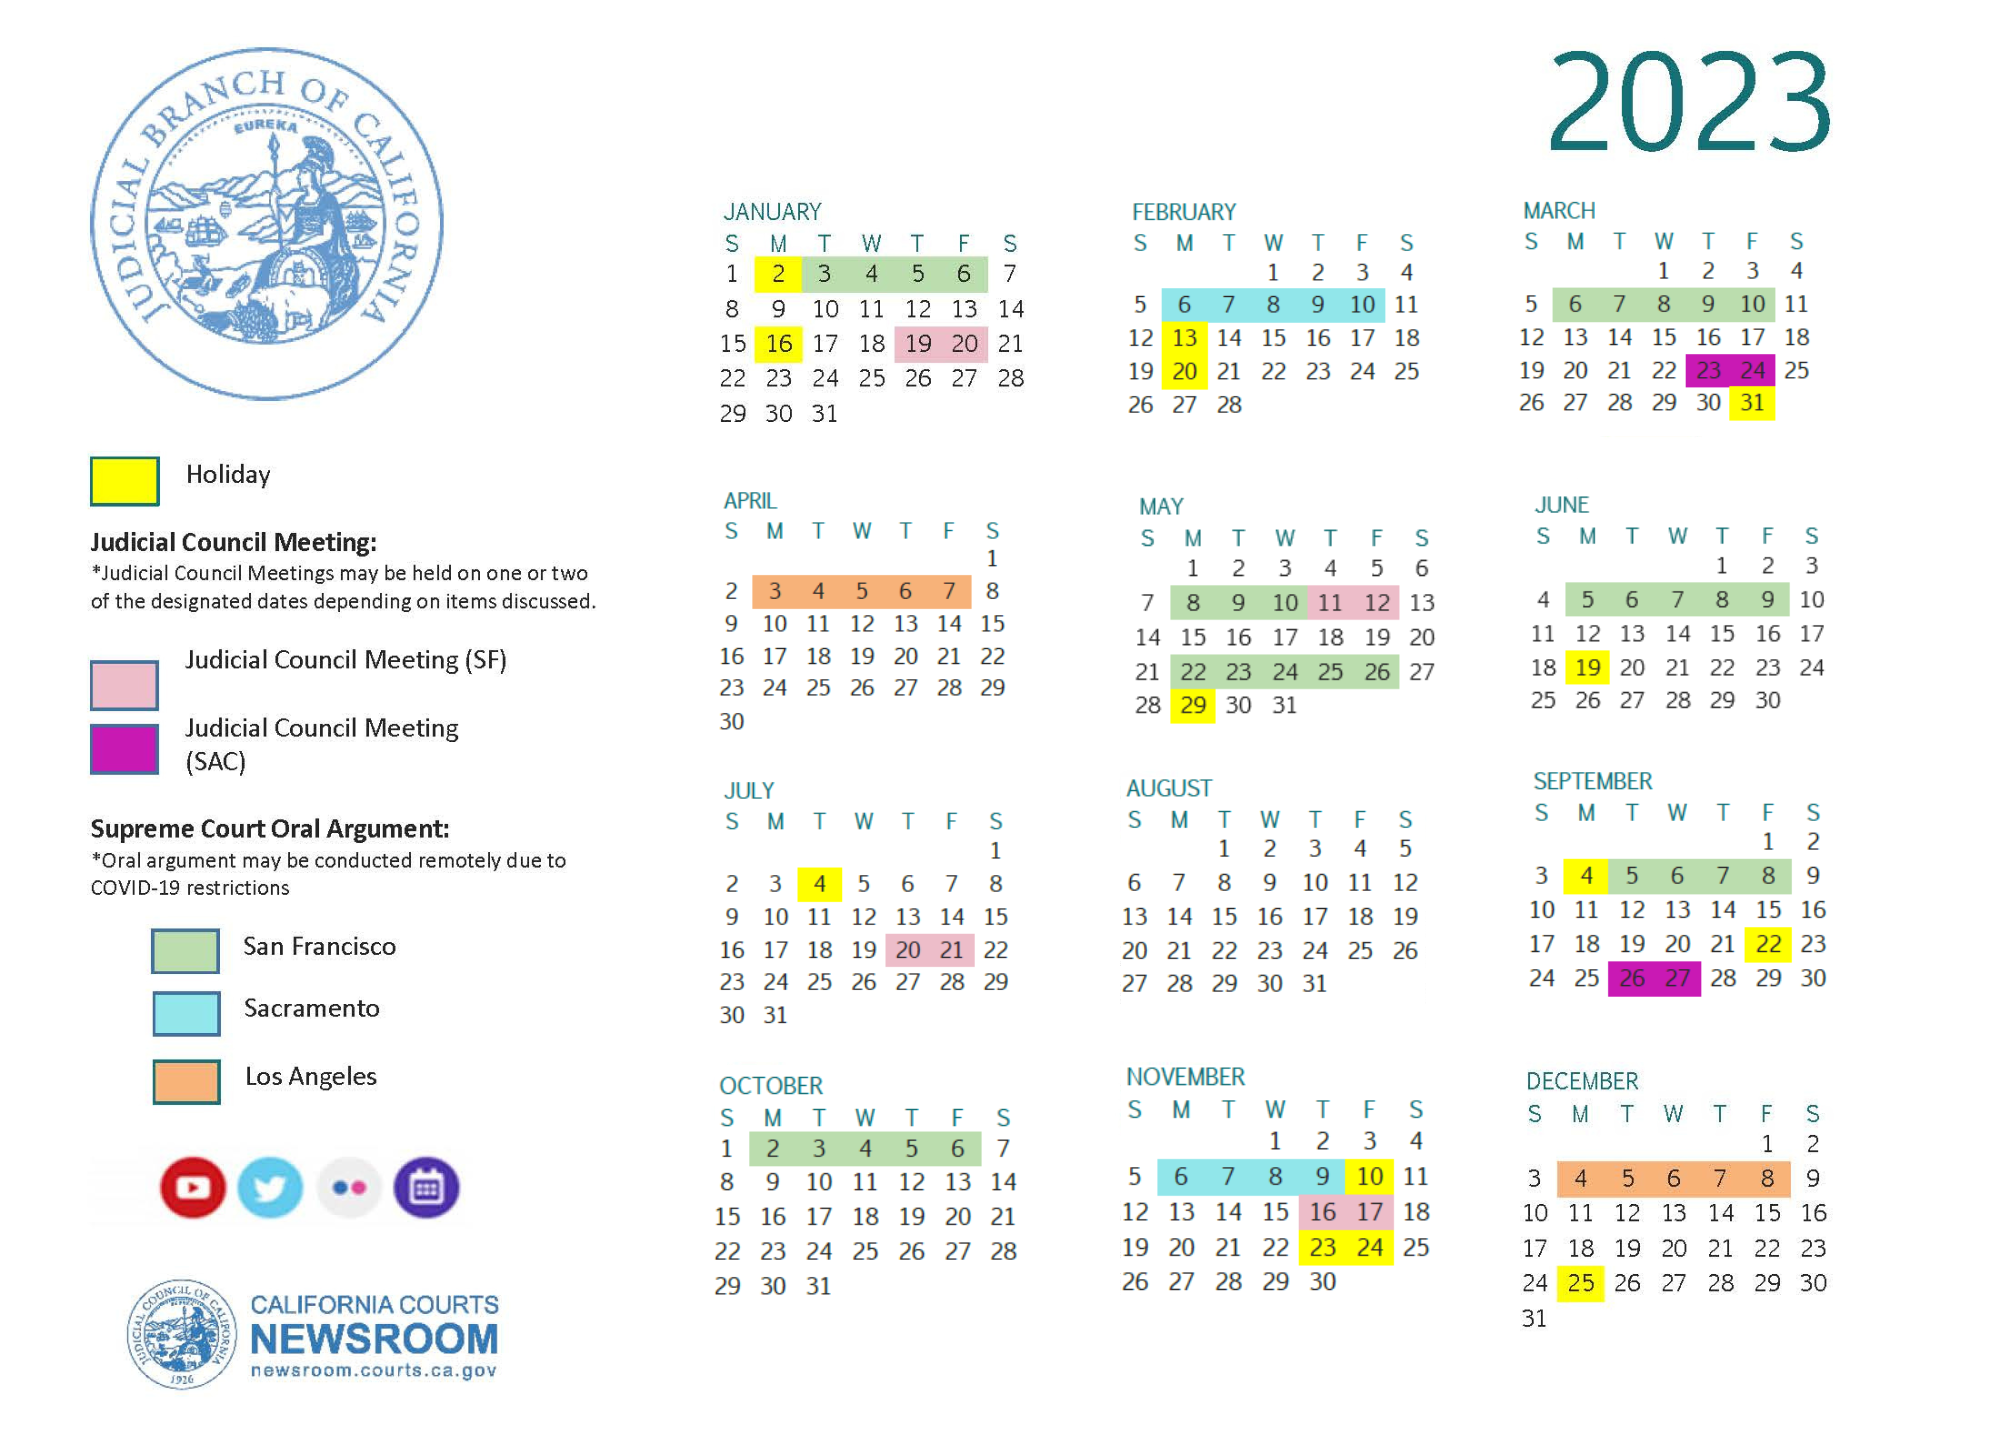 Judicial Council Calendar for 2023